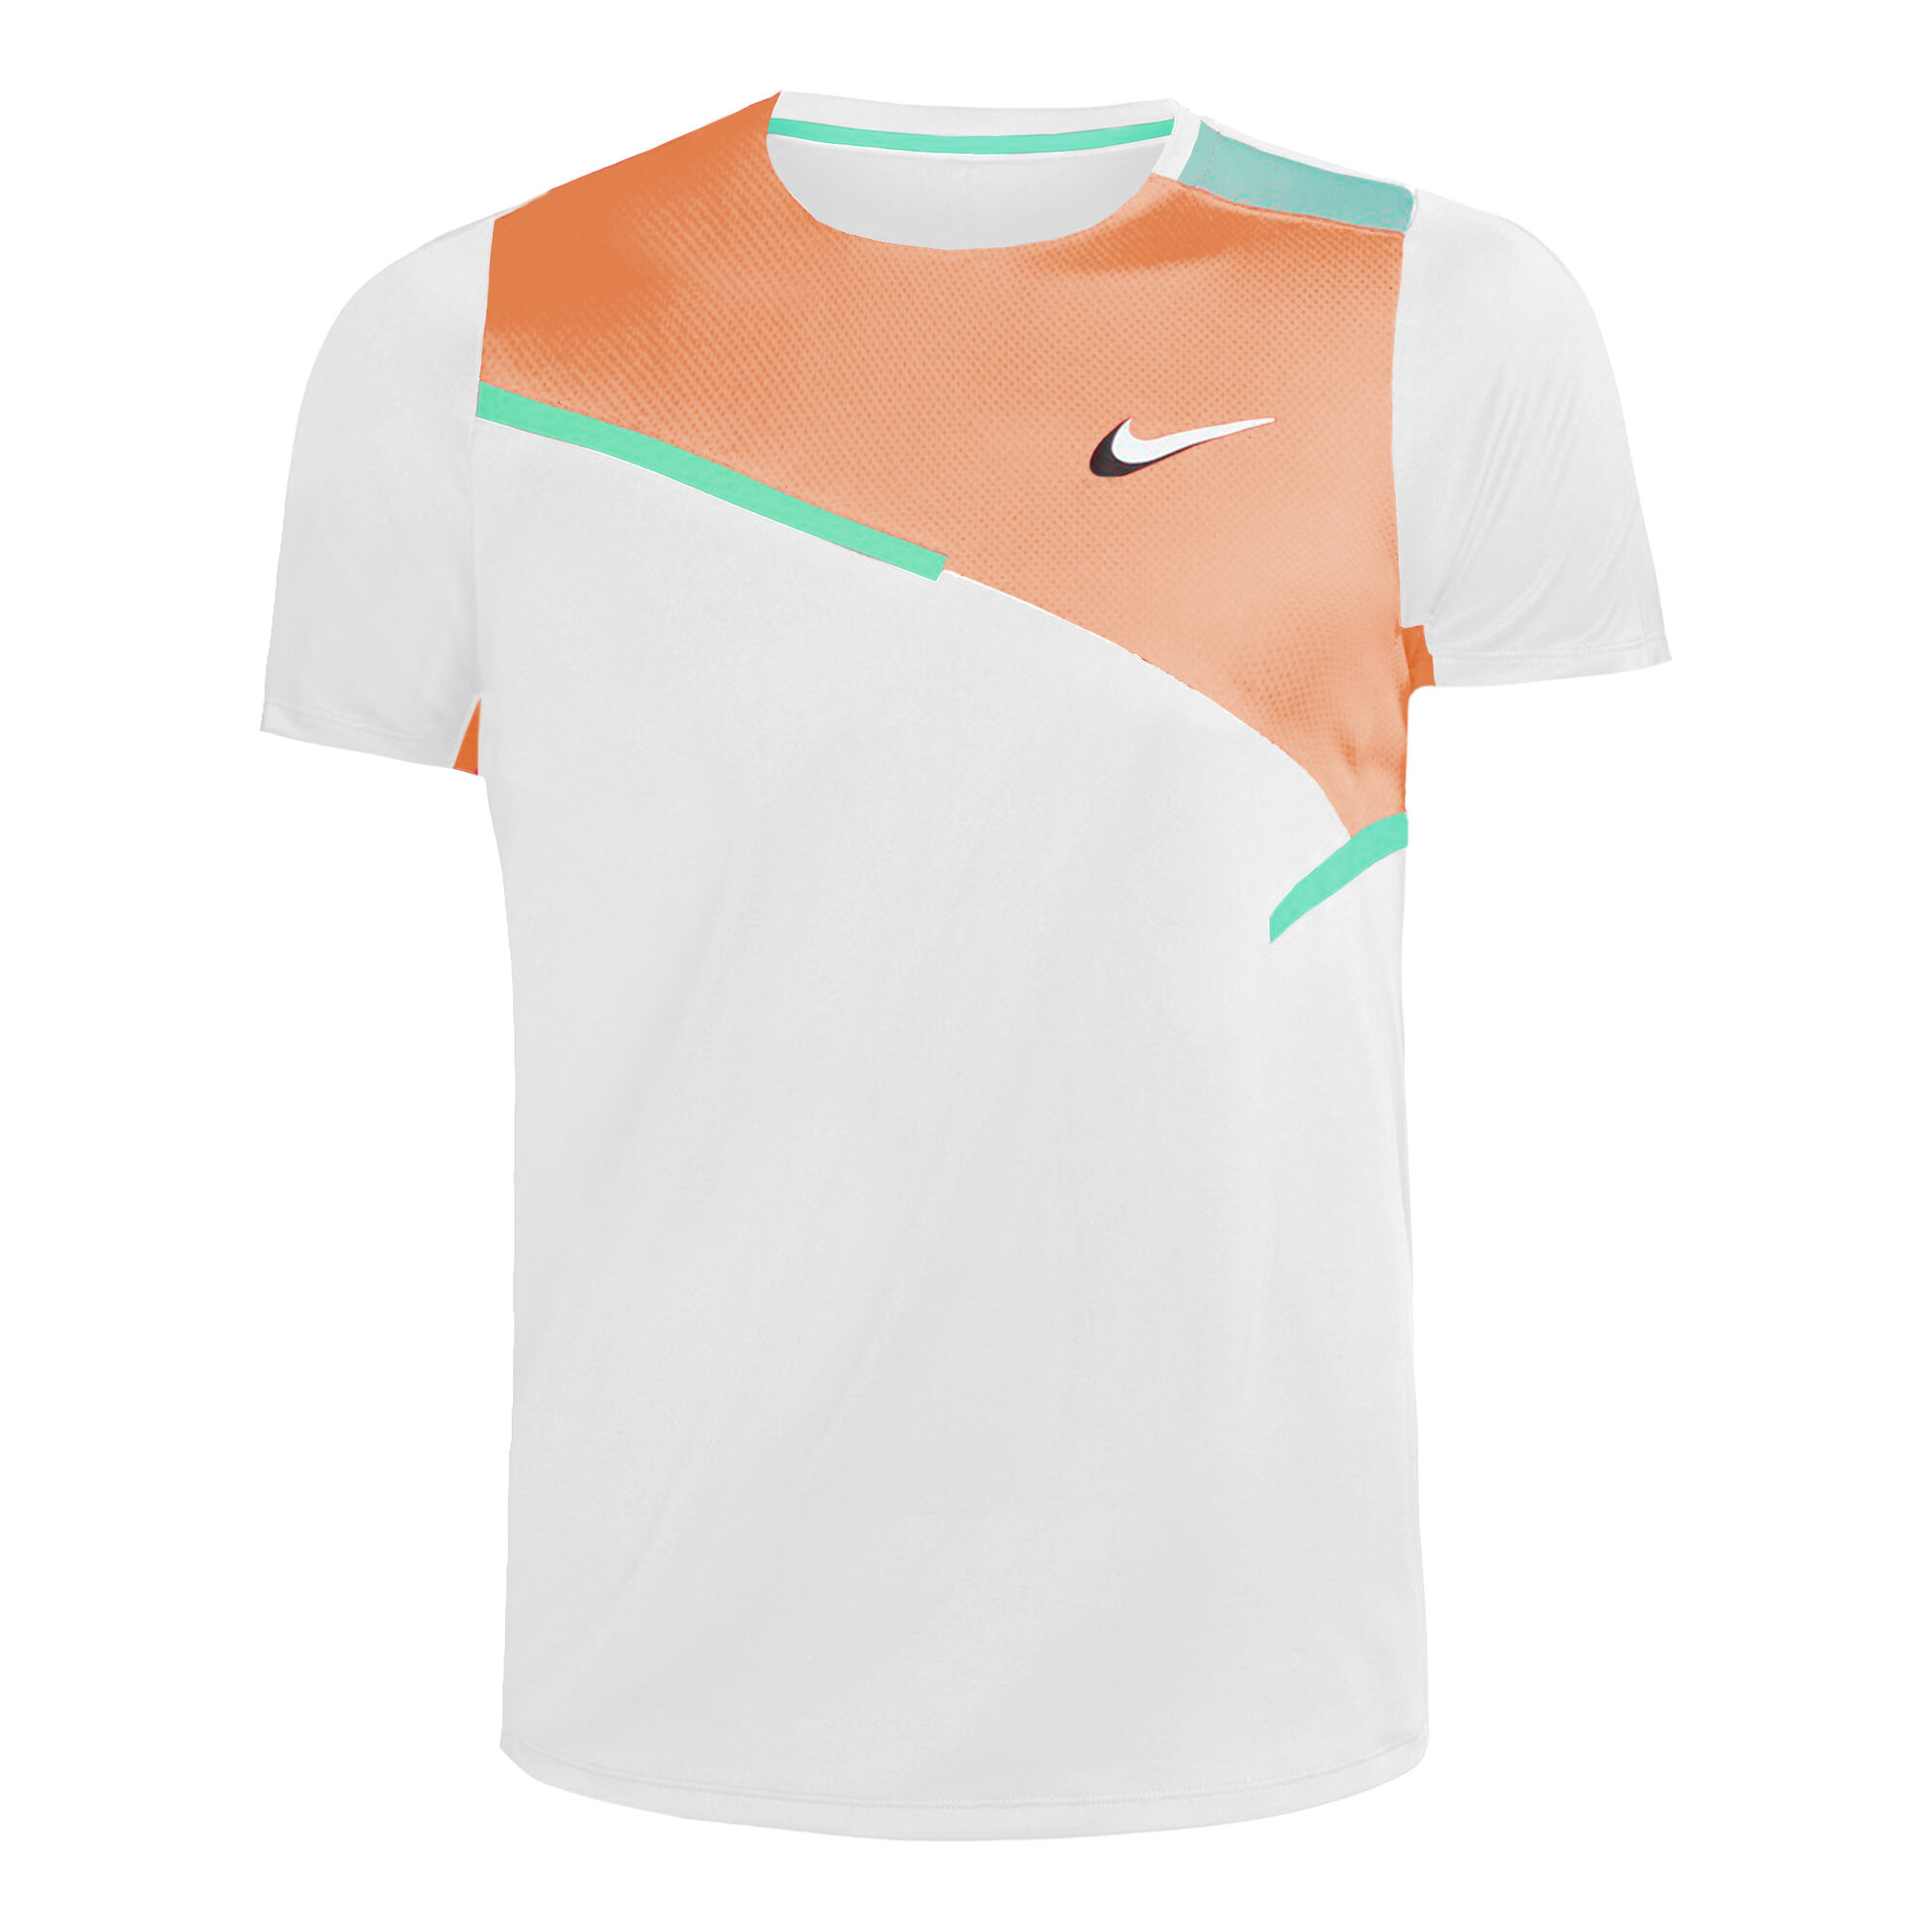 Seguid así Muñeco de peluche Profecía buy Nike Court Dry Slam T-Shirt Men - White, Orange online | Tennis-Point